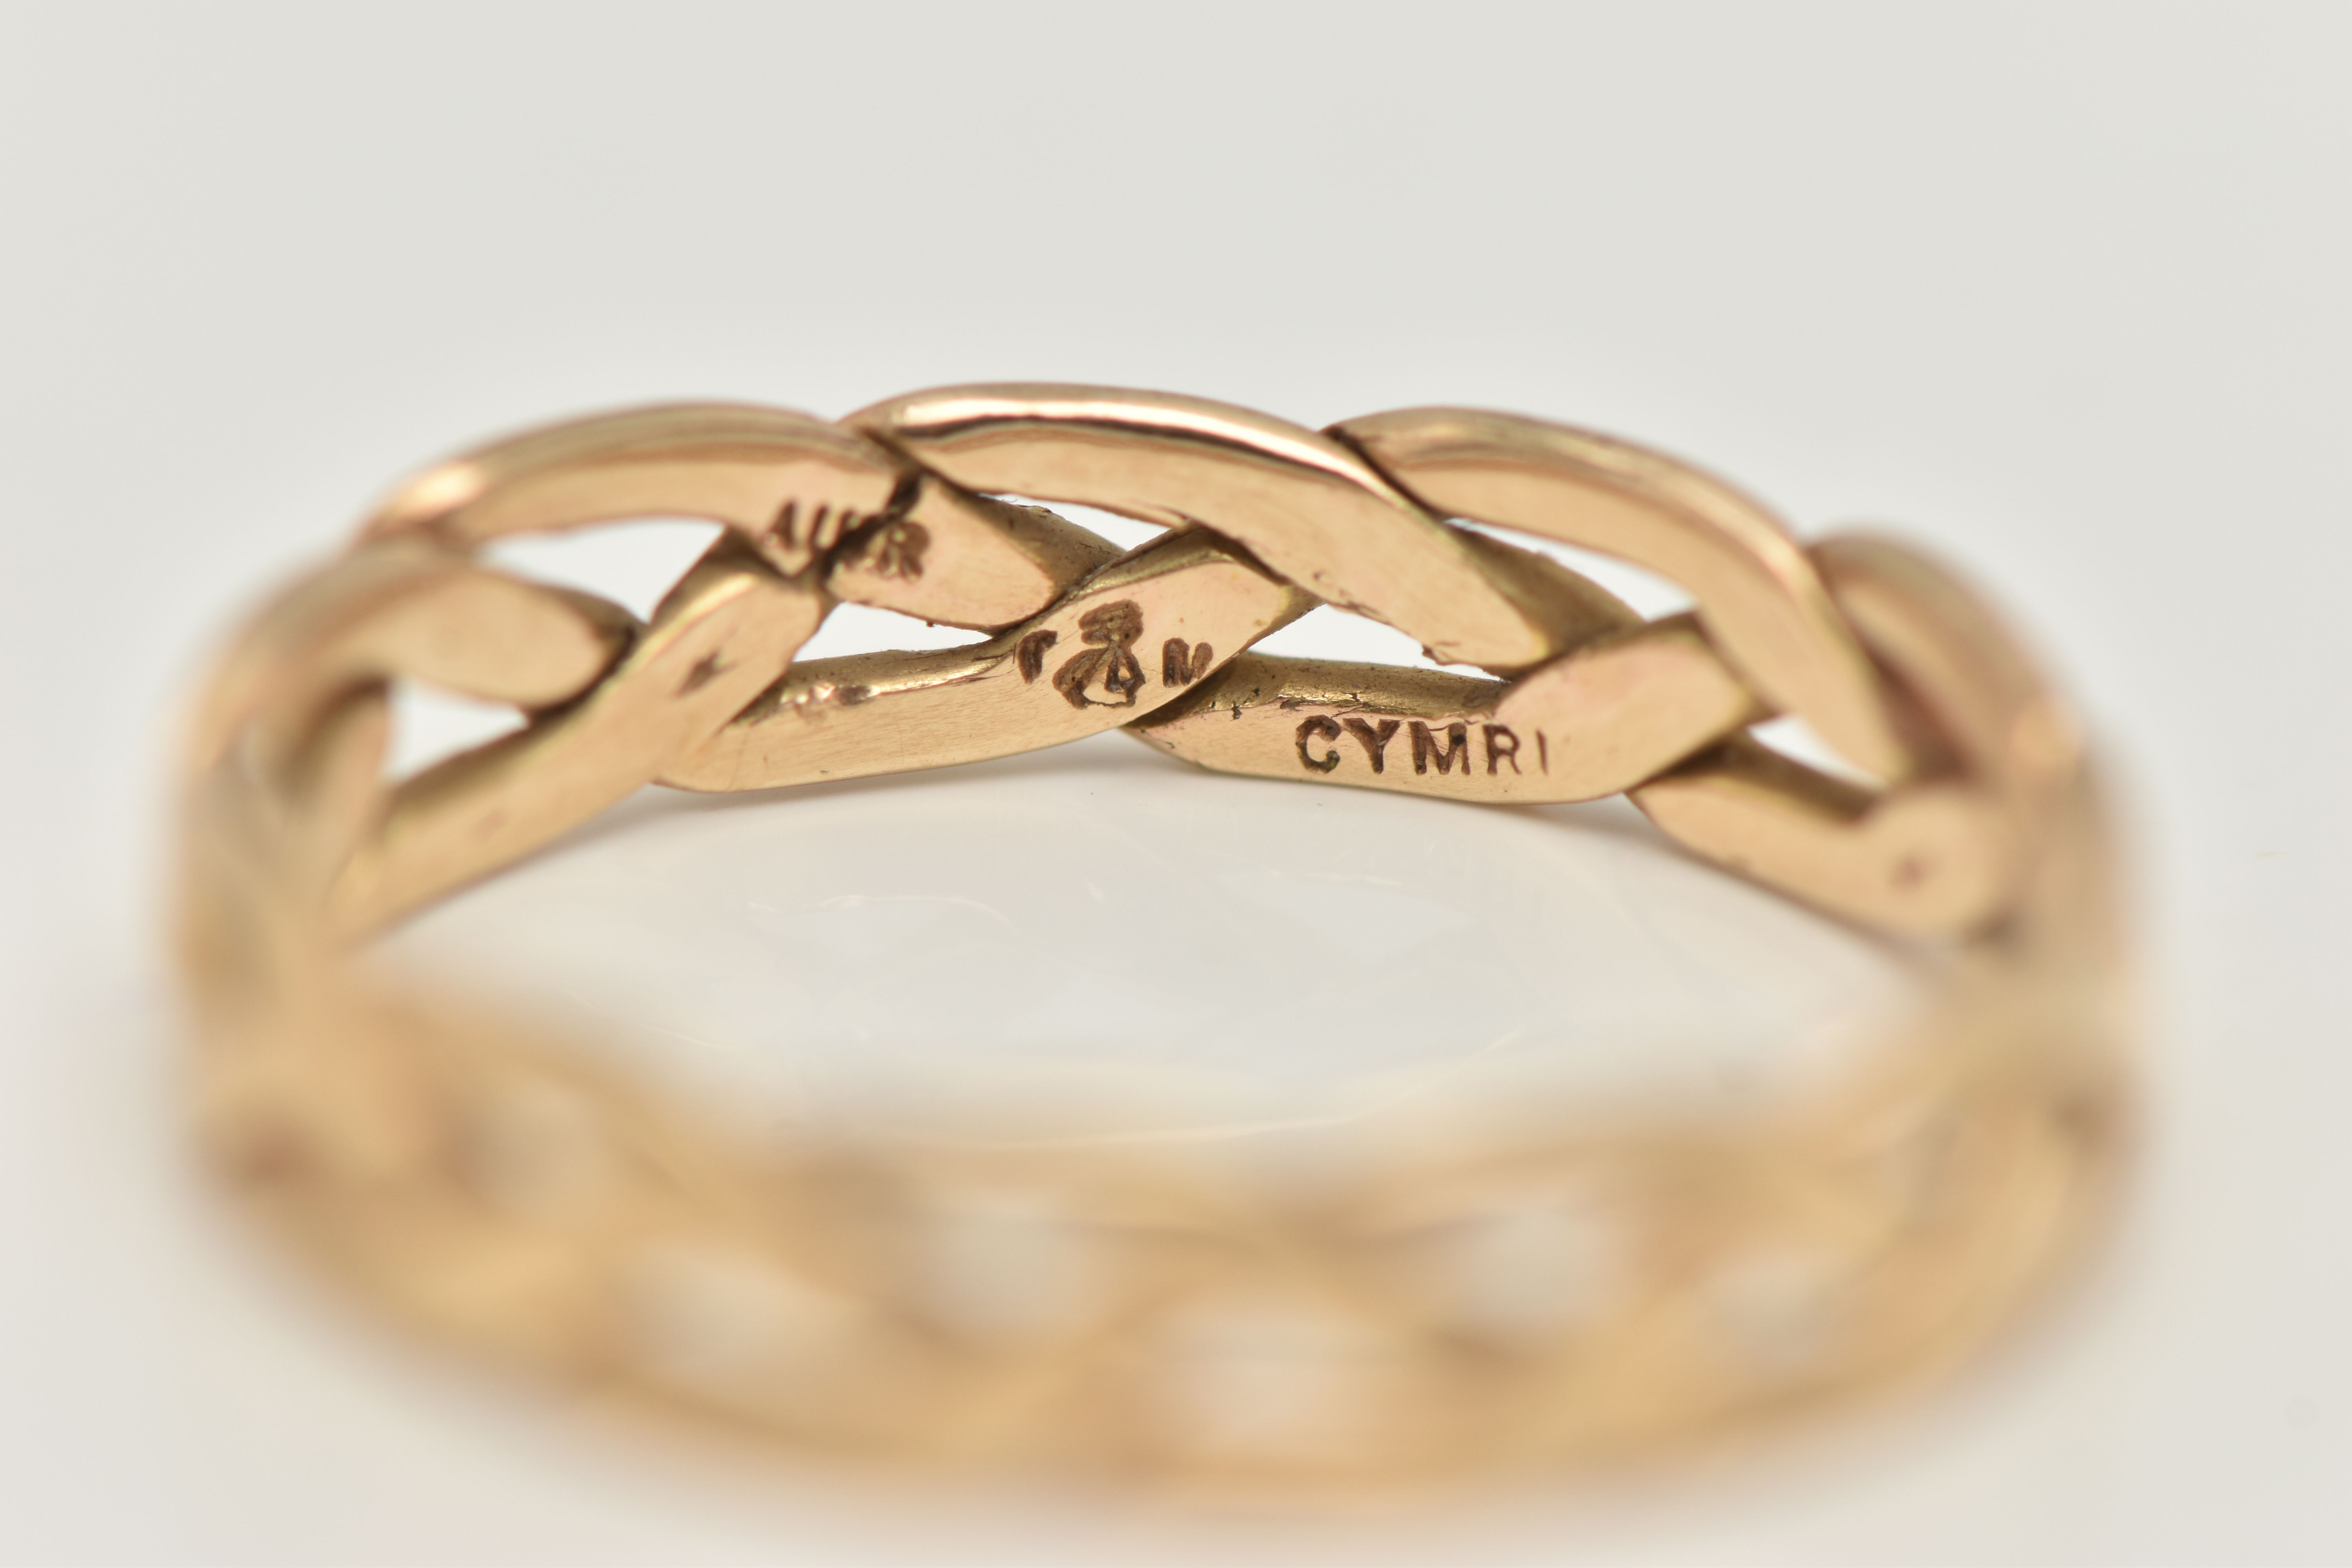 A 'KLEVIN JENKINS' WELSH GOLD RING, a Celtic design 9ct gold ring, approximate width 4.5mm, - Image 4 of 5